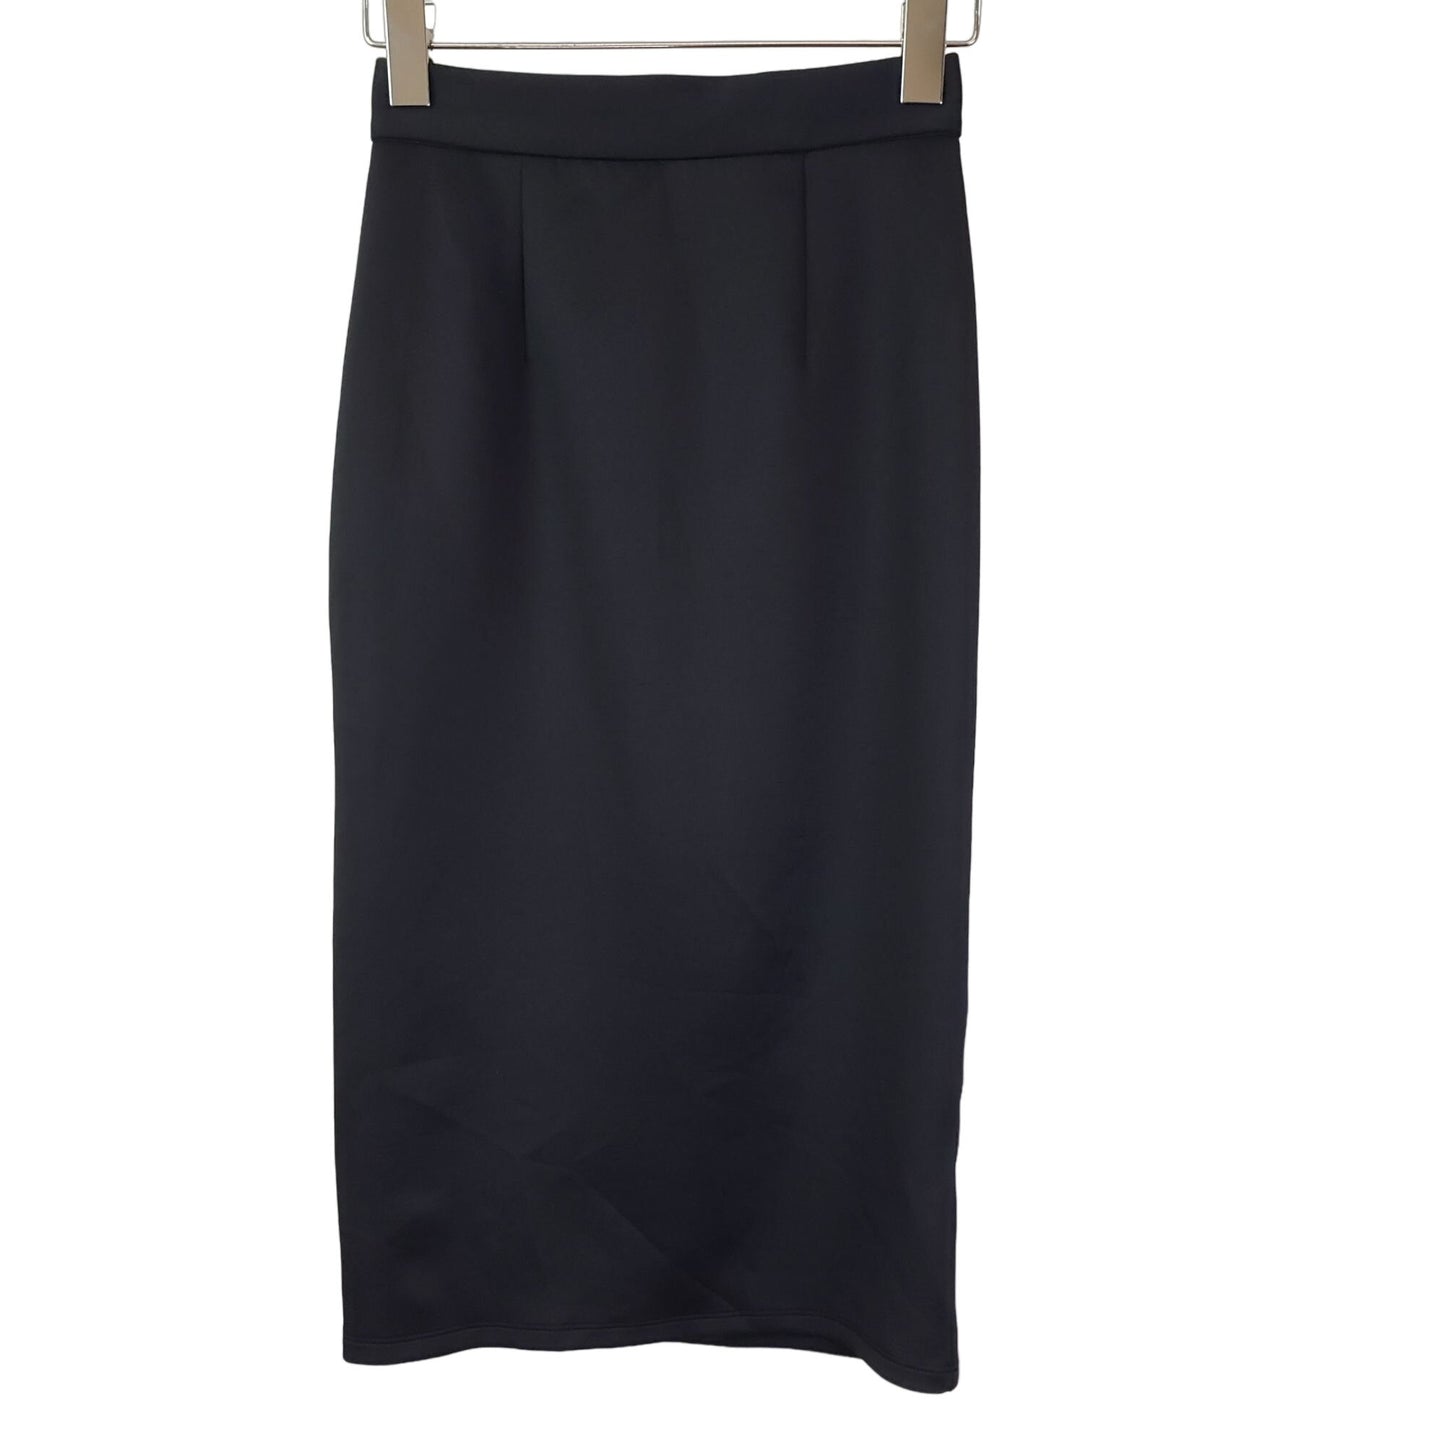 NWT Yumi Kim Stretchy Pencil Skirt Size XL